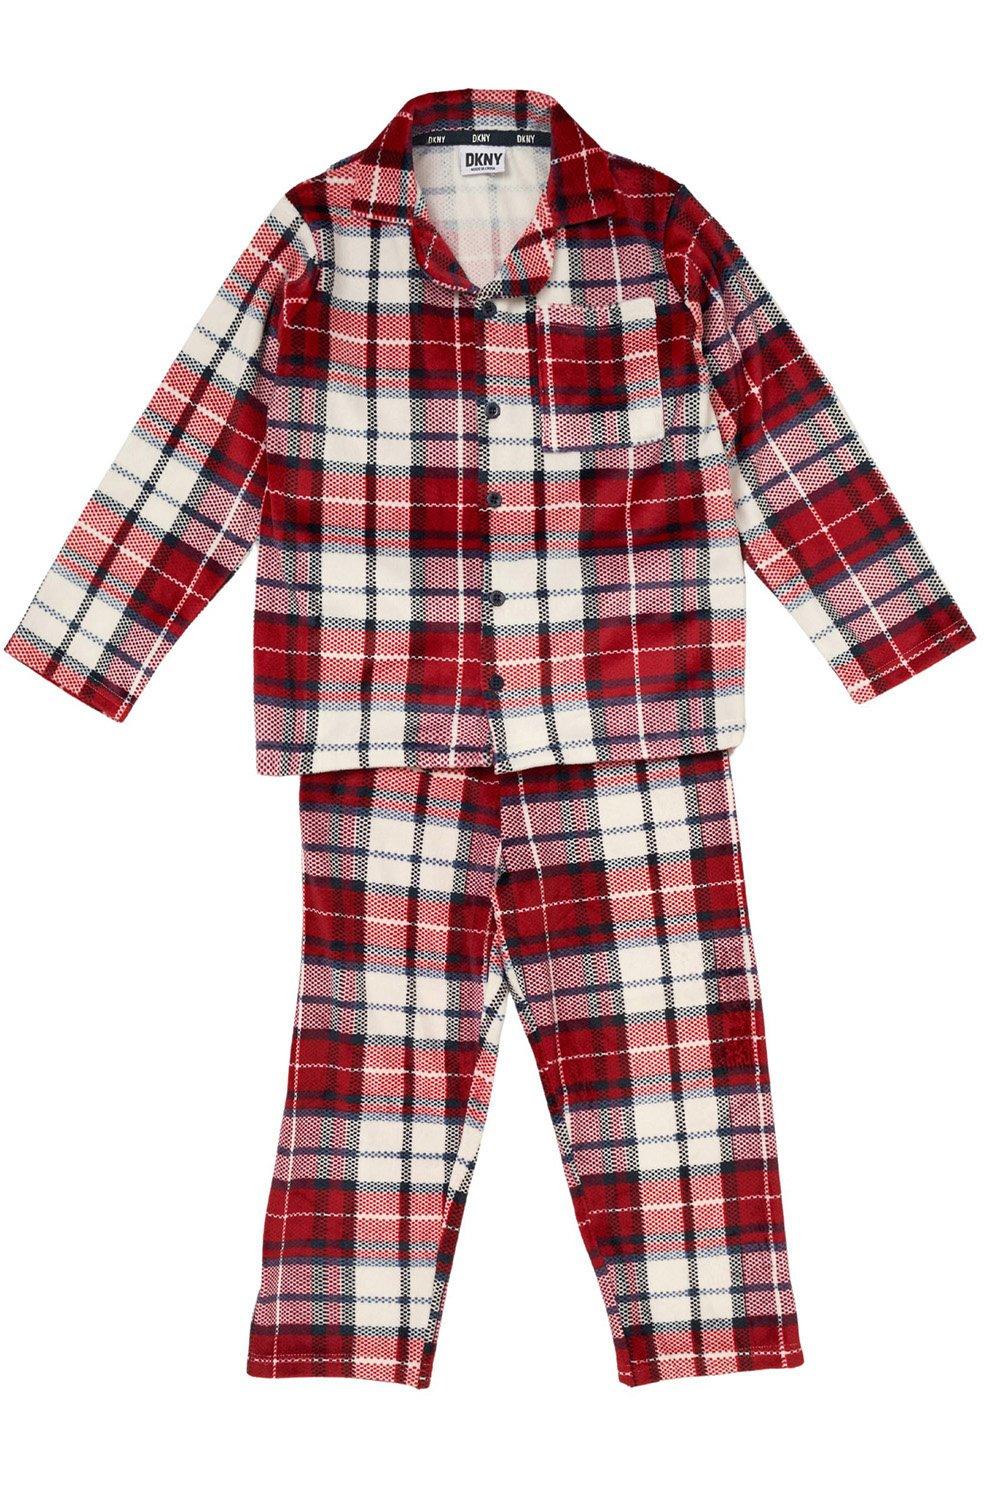 Boys Minky Pyjama Set Burgundy Plaid Shirt Bottoms Toddler Child Age 2-7 years